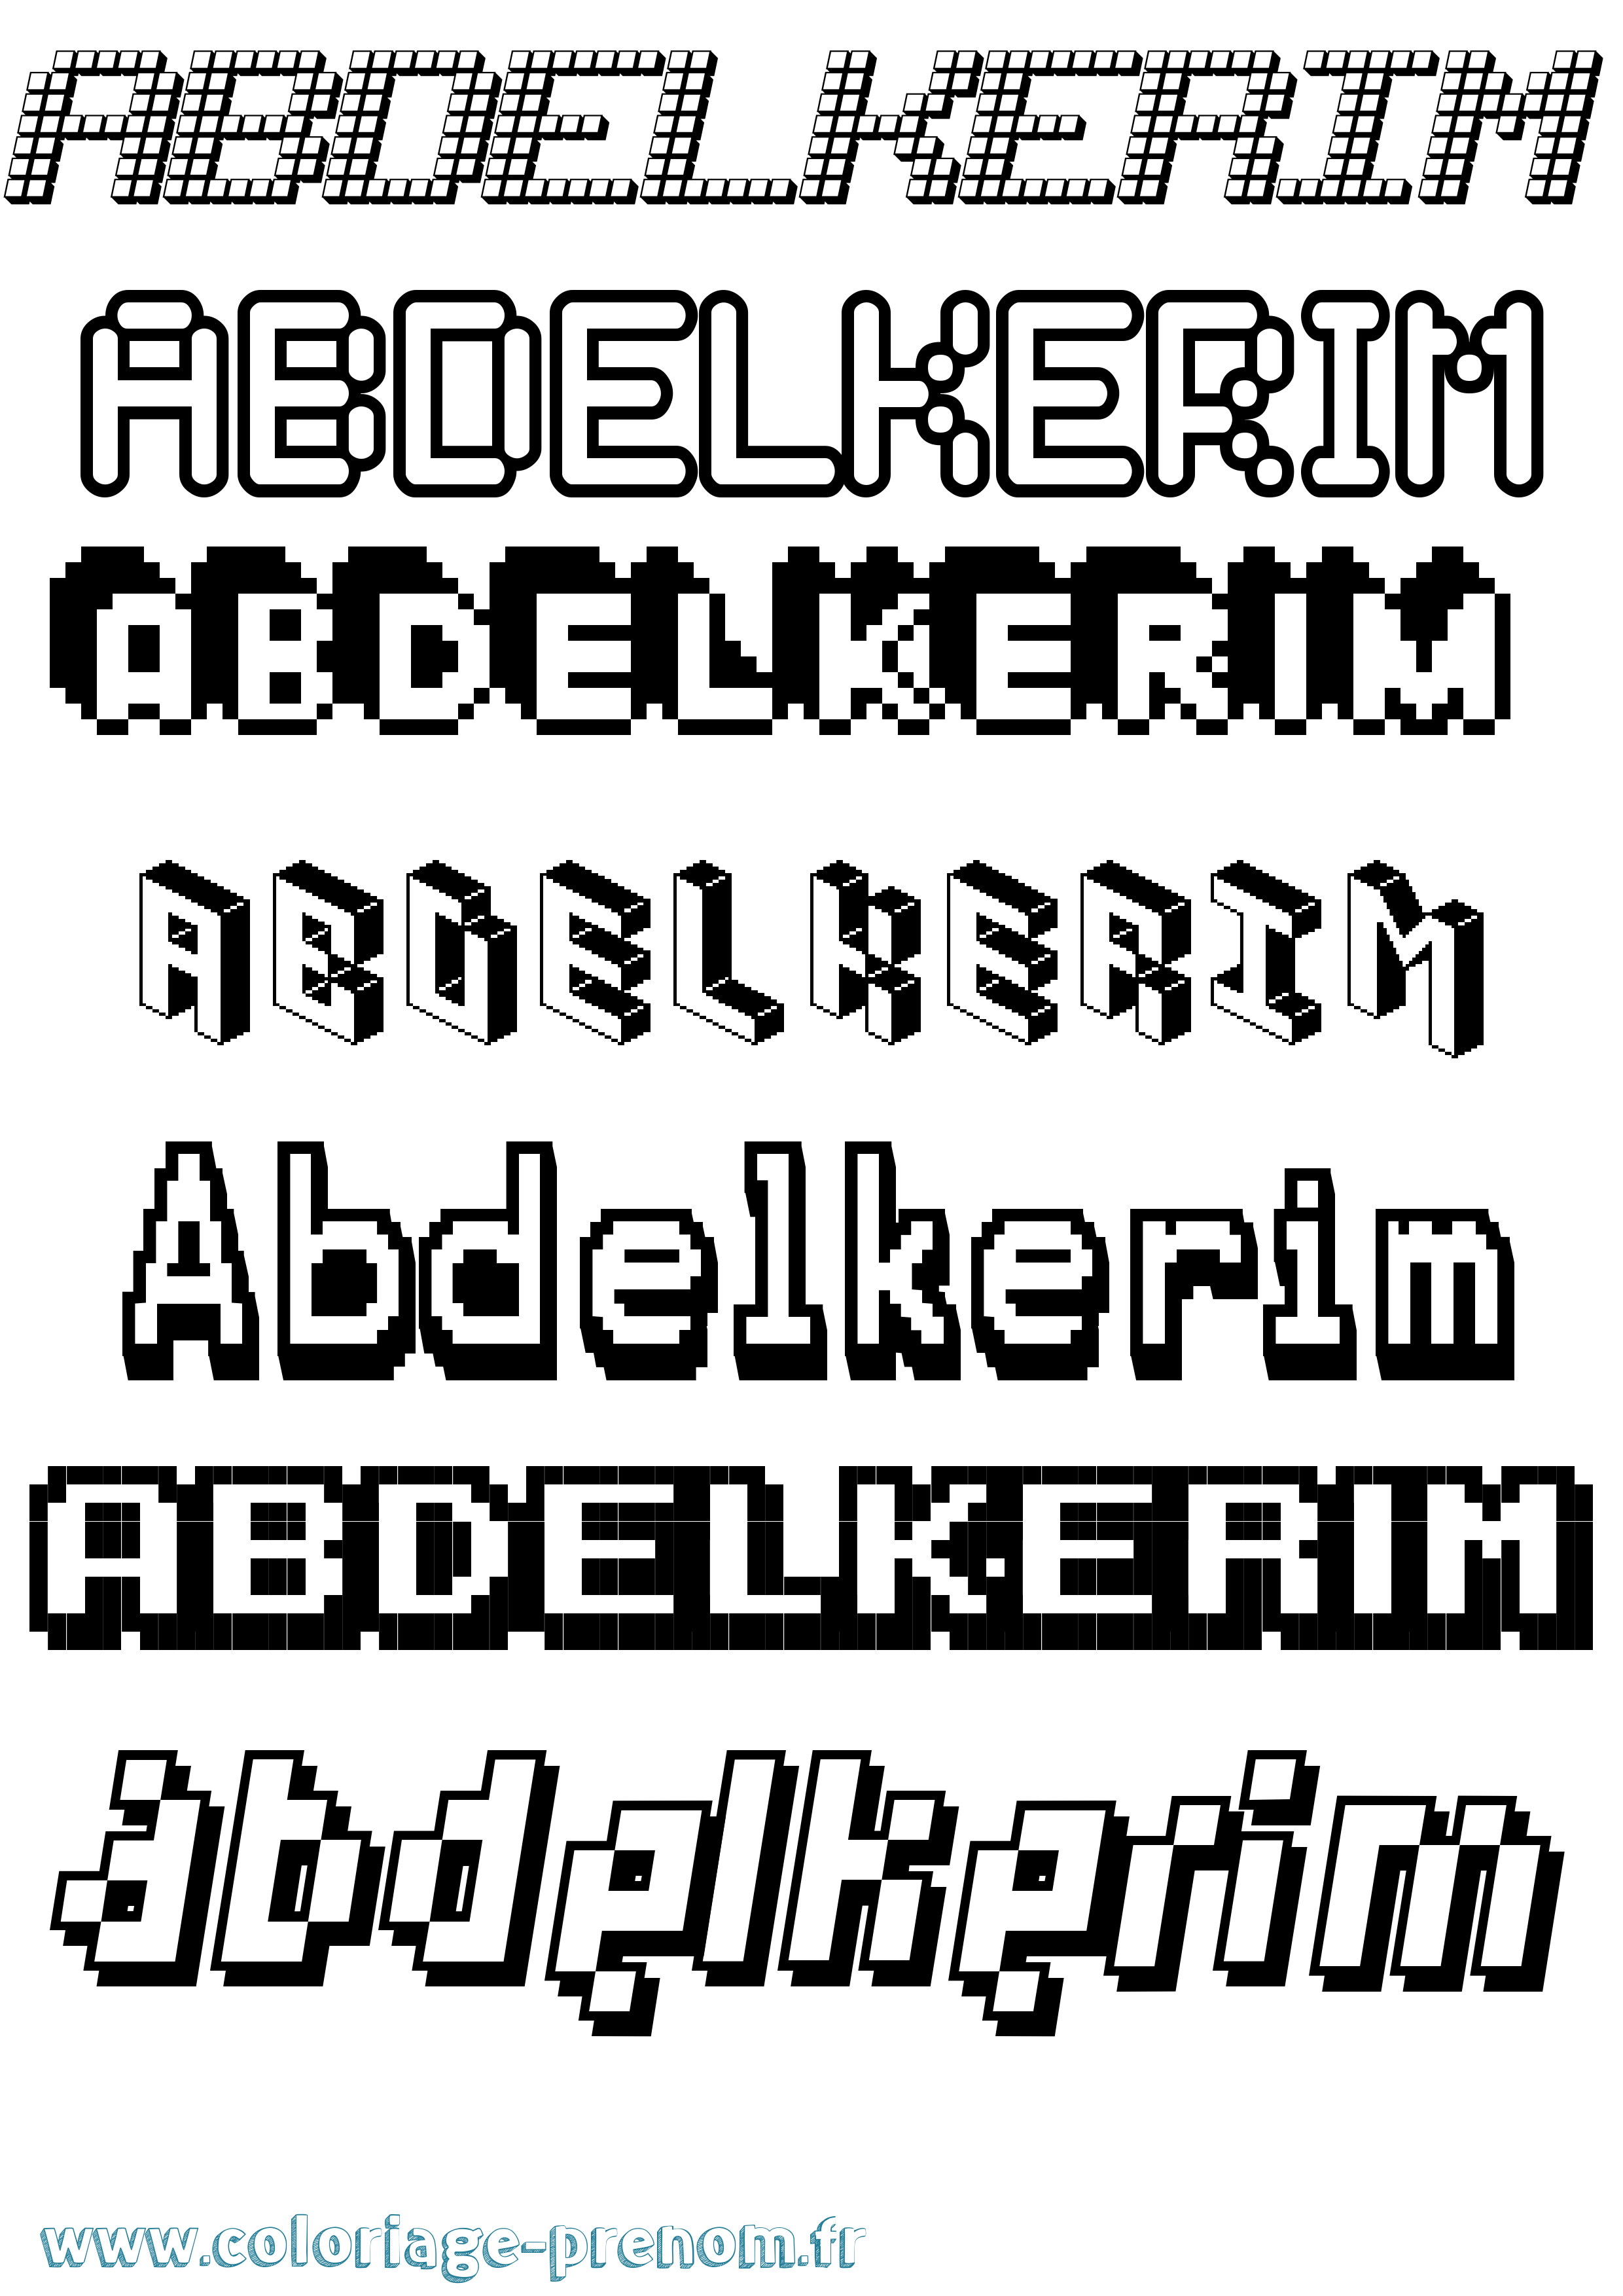 Coloriage prénom Abdelkerim Pixel